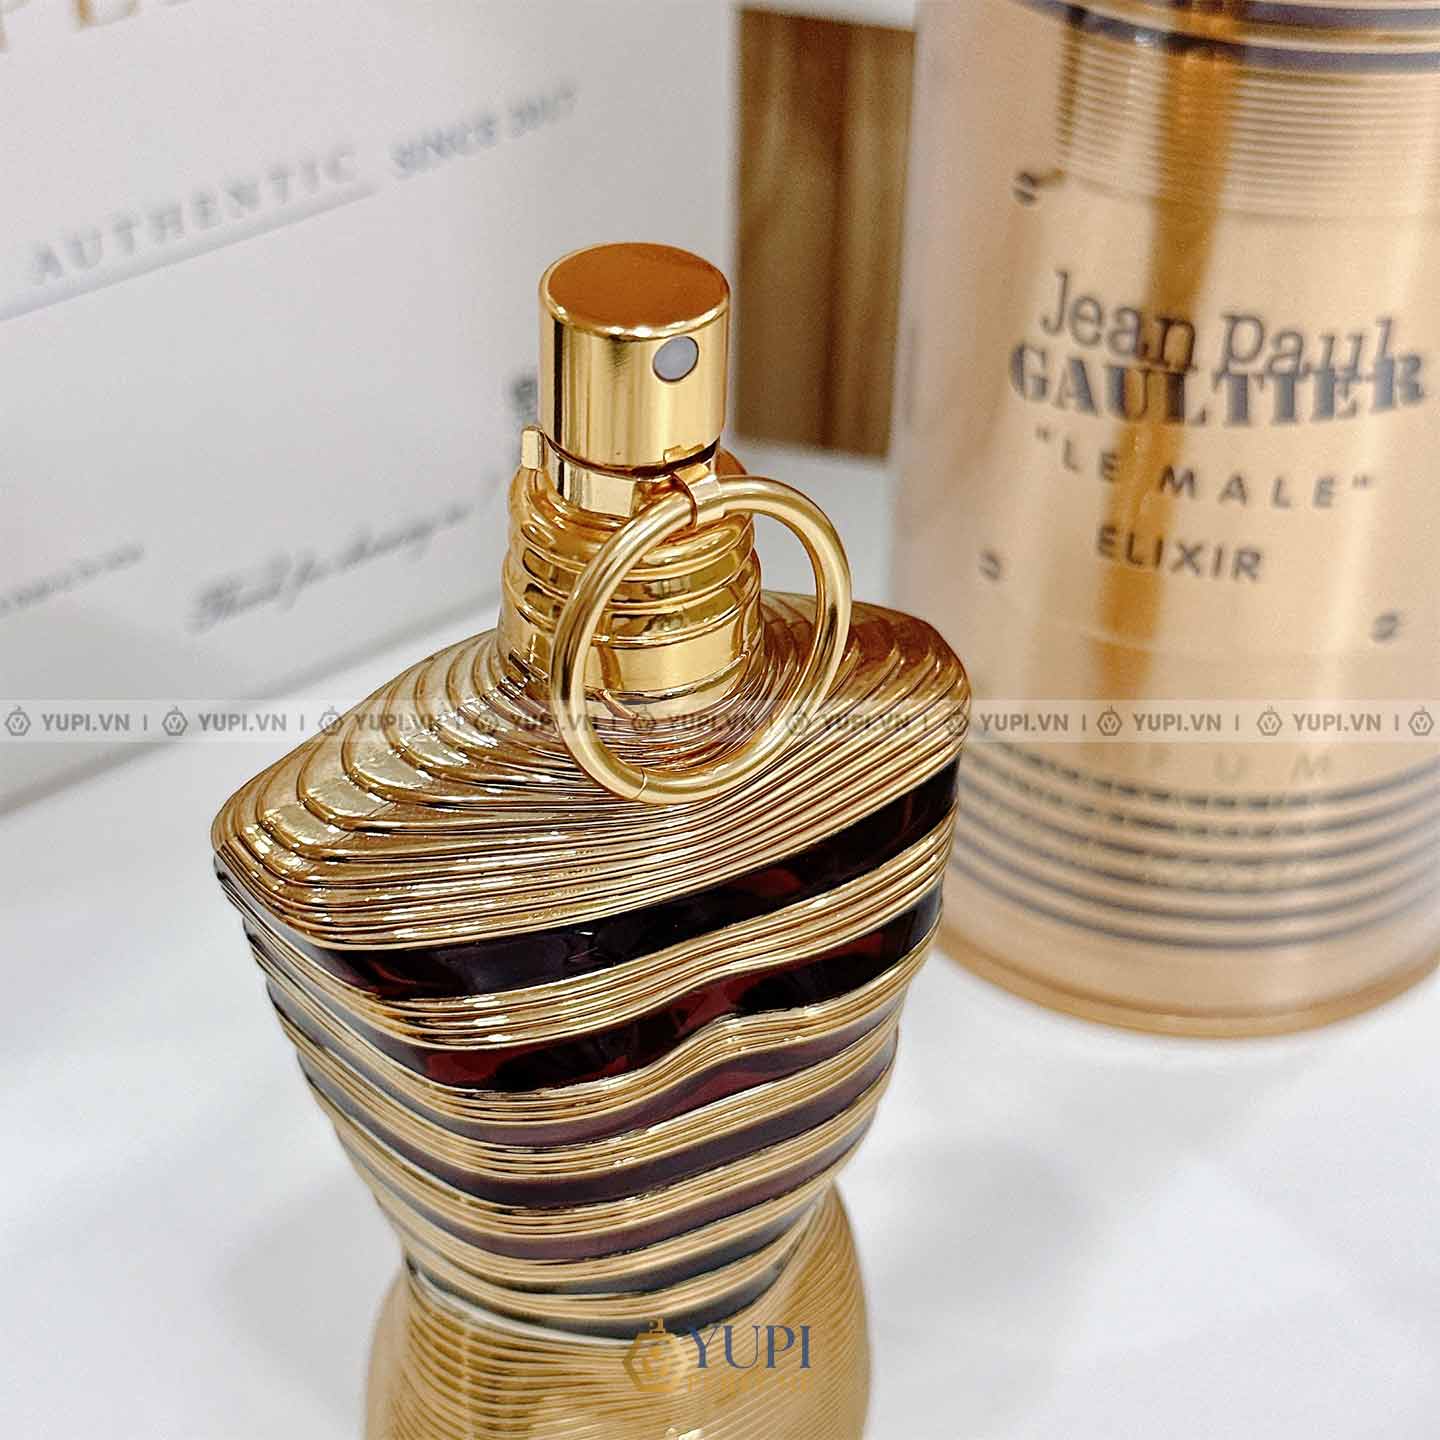 jean paul gaultier le male elixir parfum